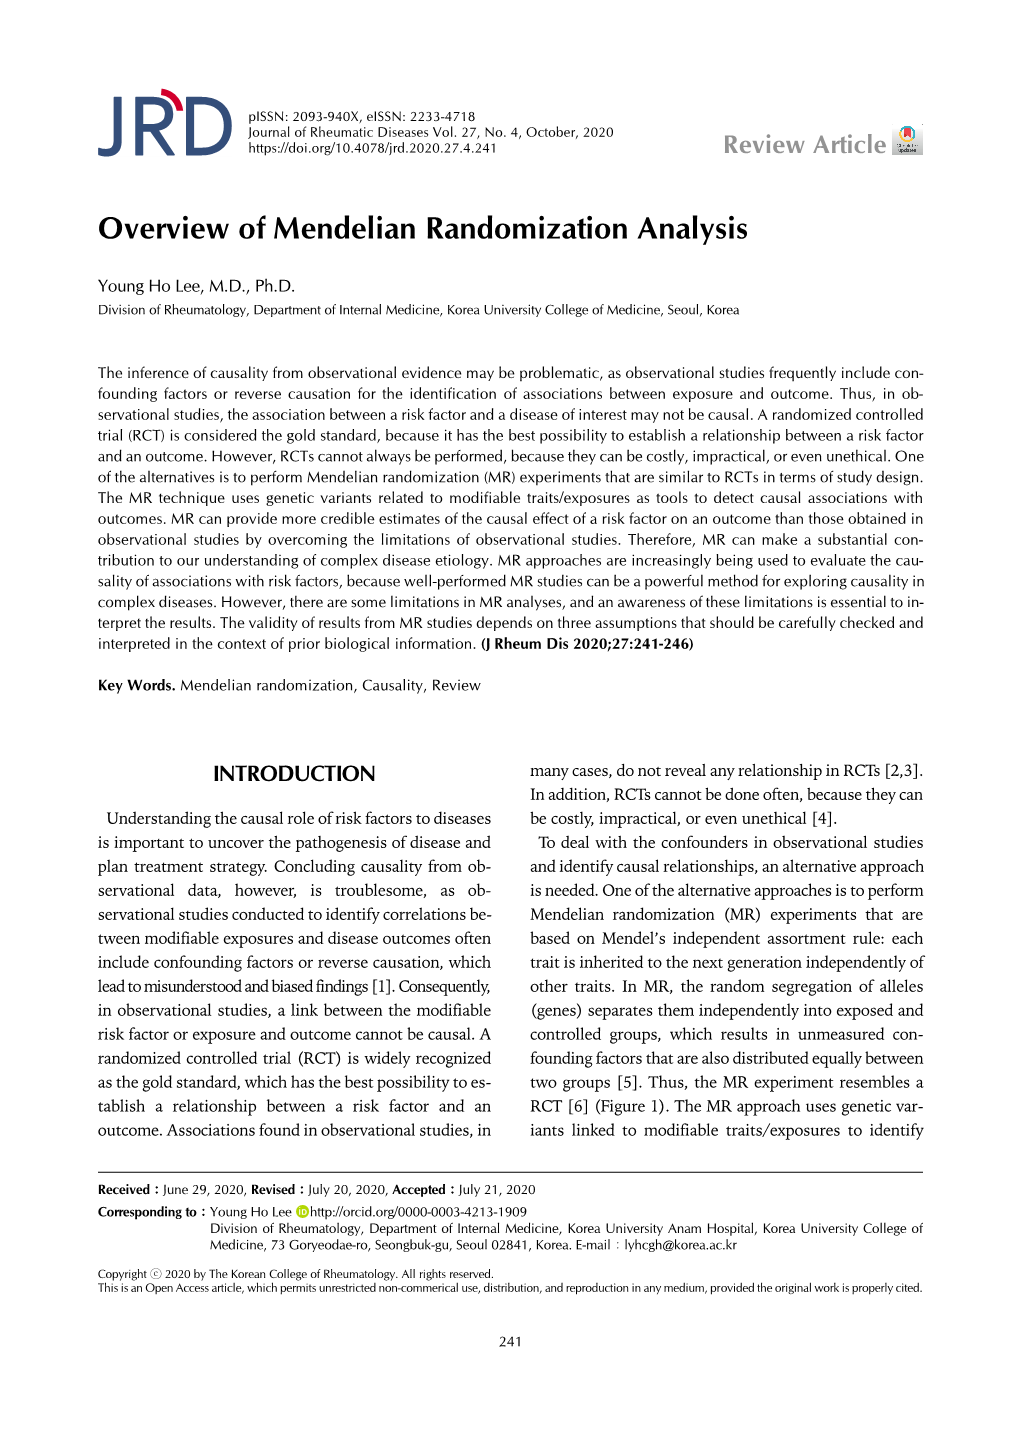 Overview of Mendelian Randomization Analysis